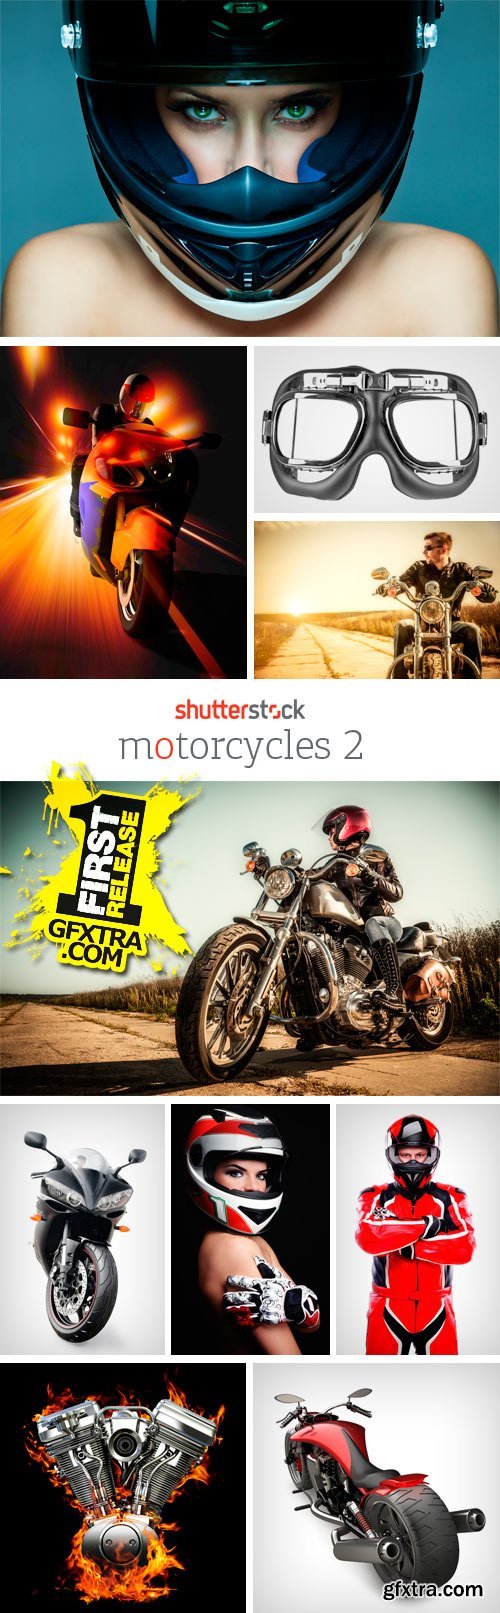 Motorcycles 2, 25xJPG